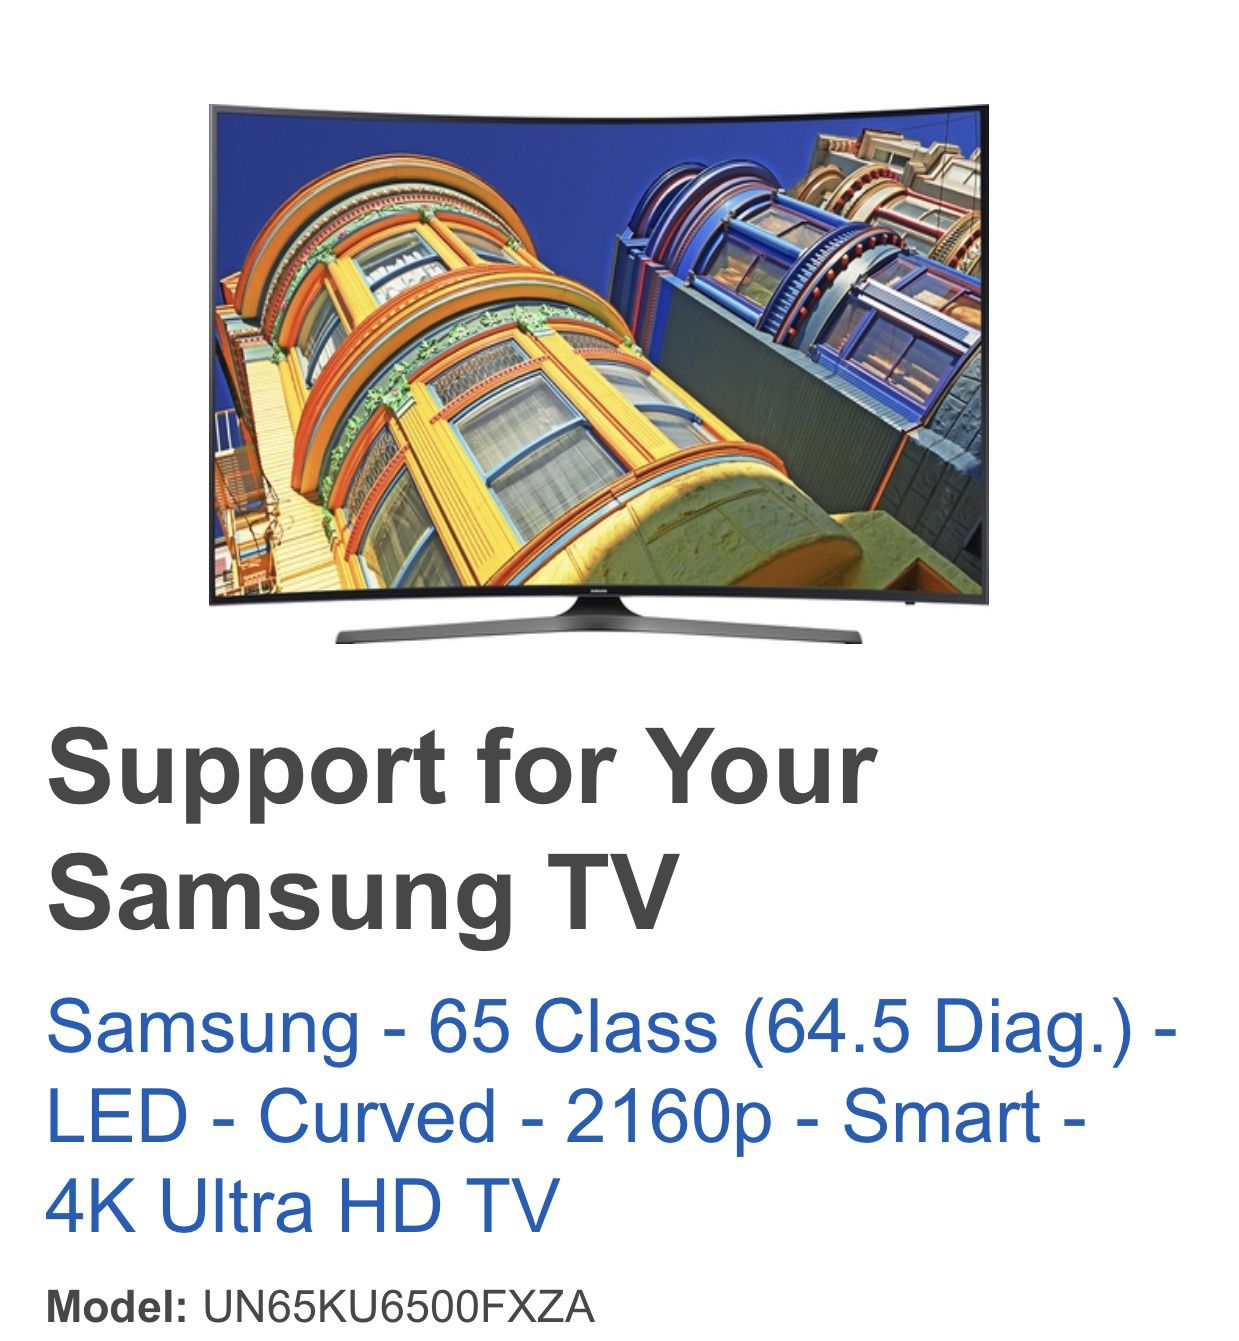 Samsung 65” class LED - Curved - 2160p - Smart 4K Ultra HD TV